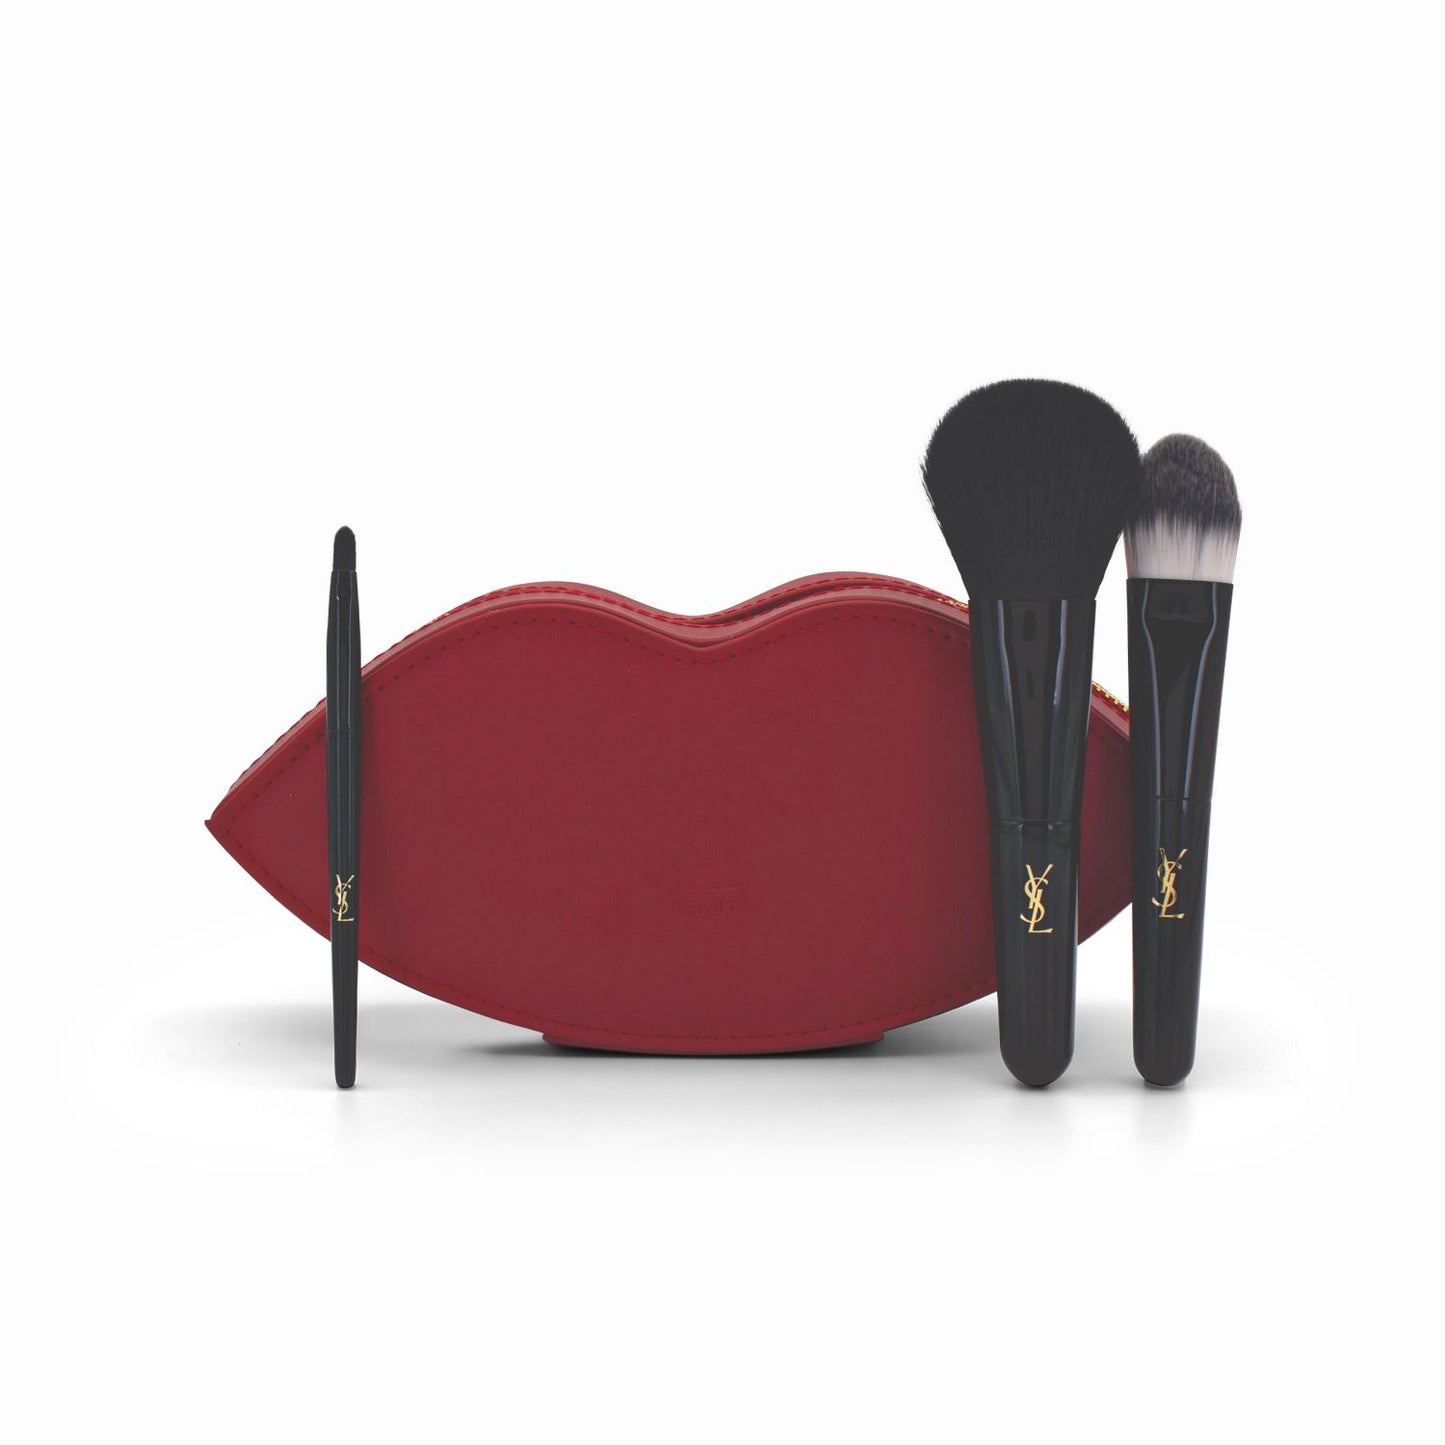 Yves Saint Laurent Beaute Red Lips 3 Piece Brush Kit - Imperfect Box